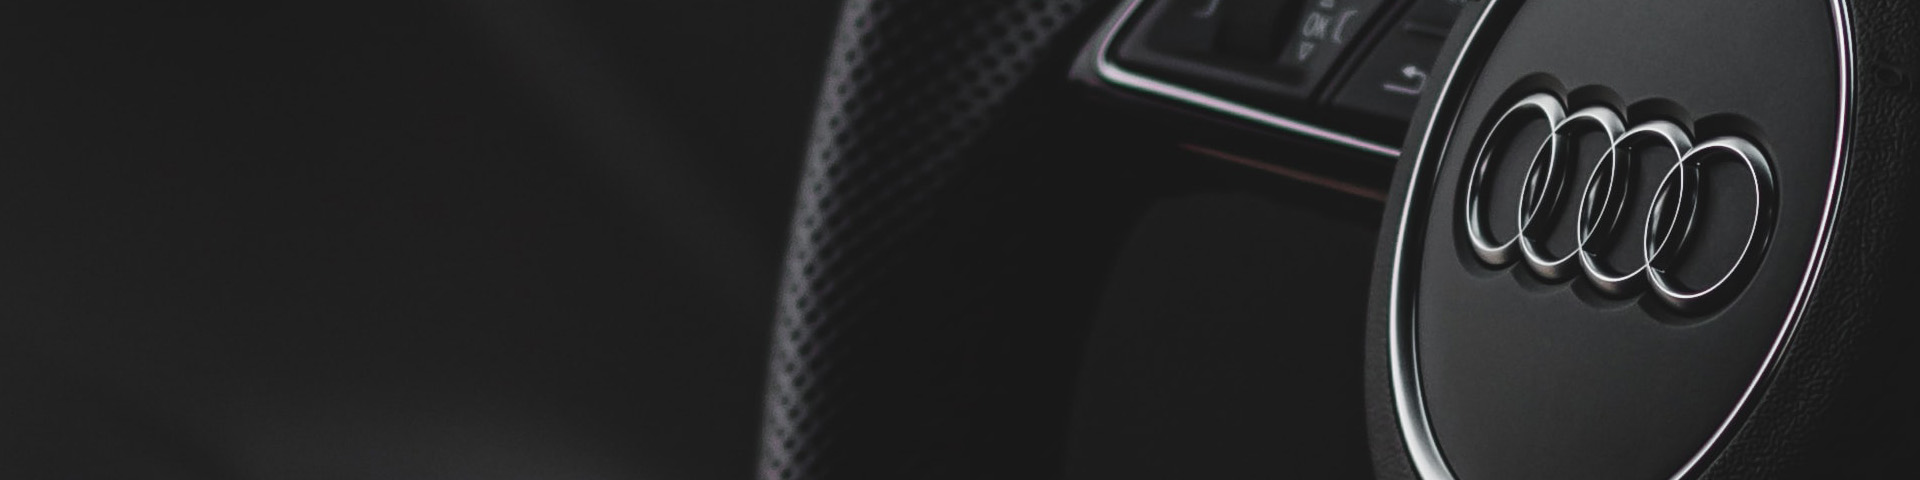 Audi RS 7 Backdrop